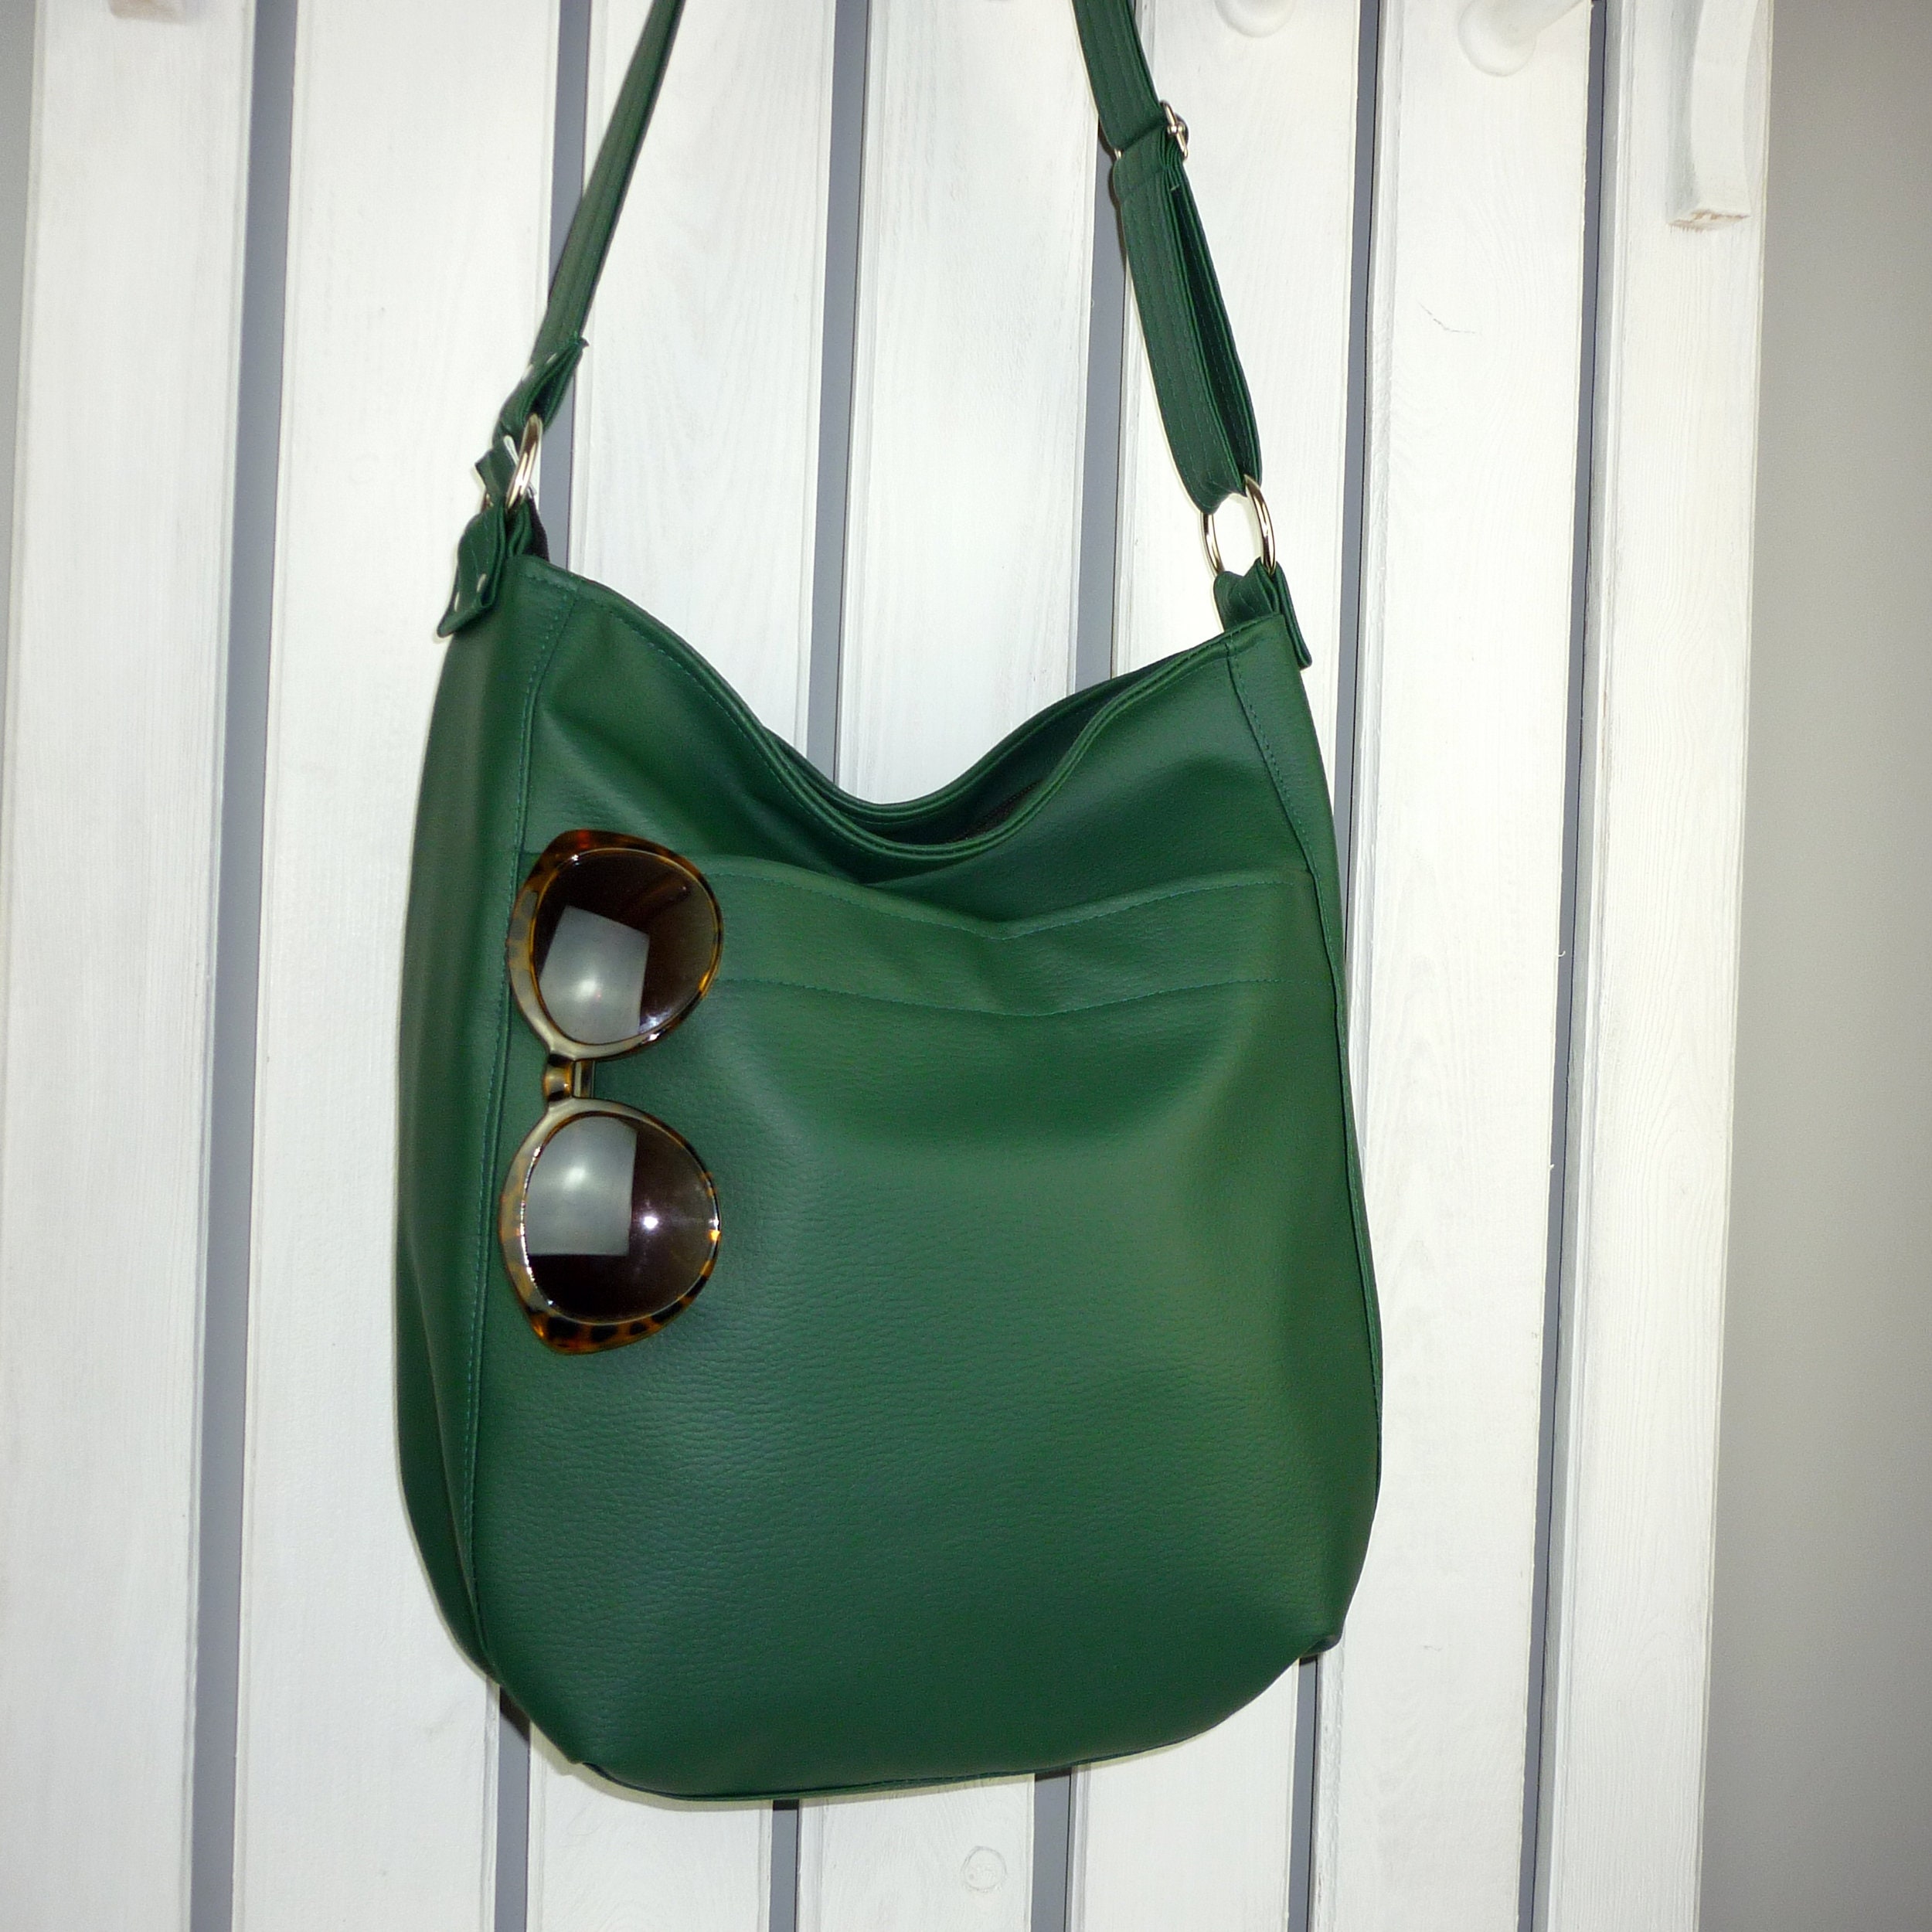 Woven Medium Hobo Handbag – Just the Thing